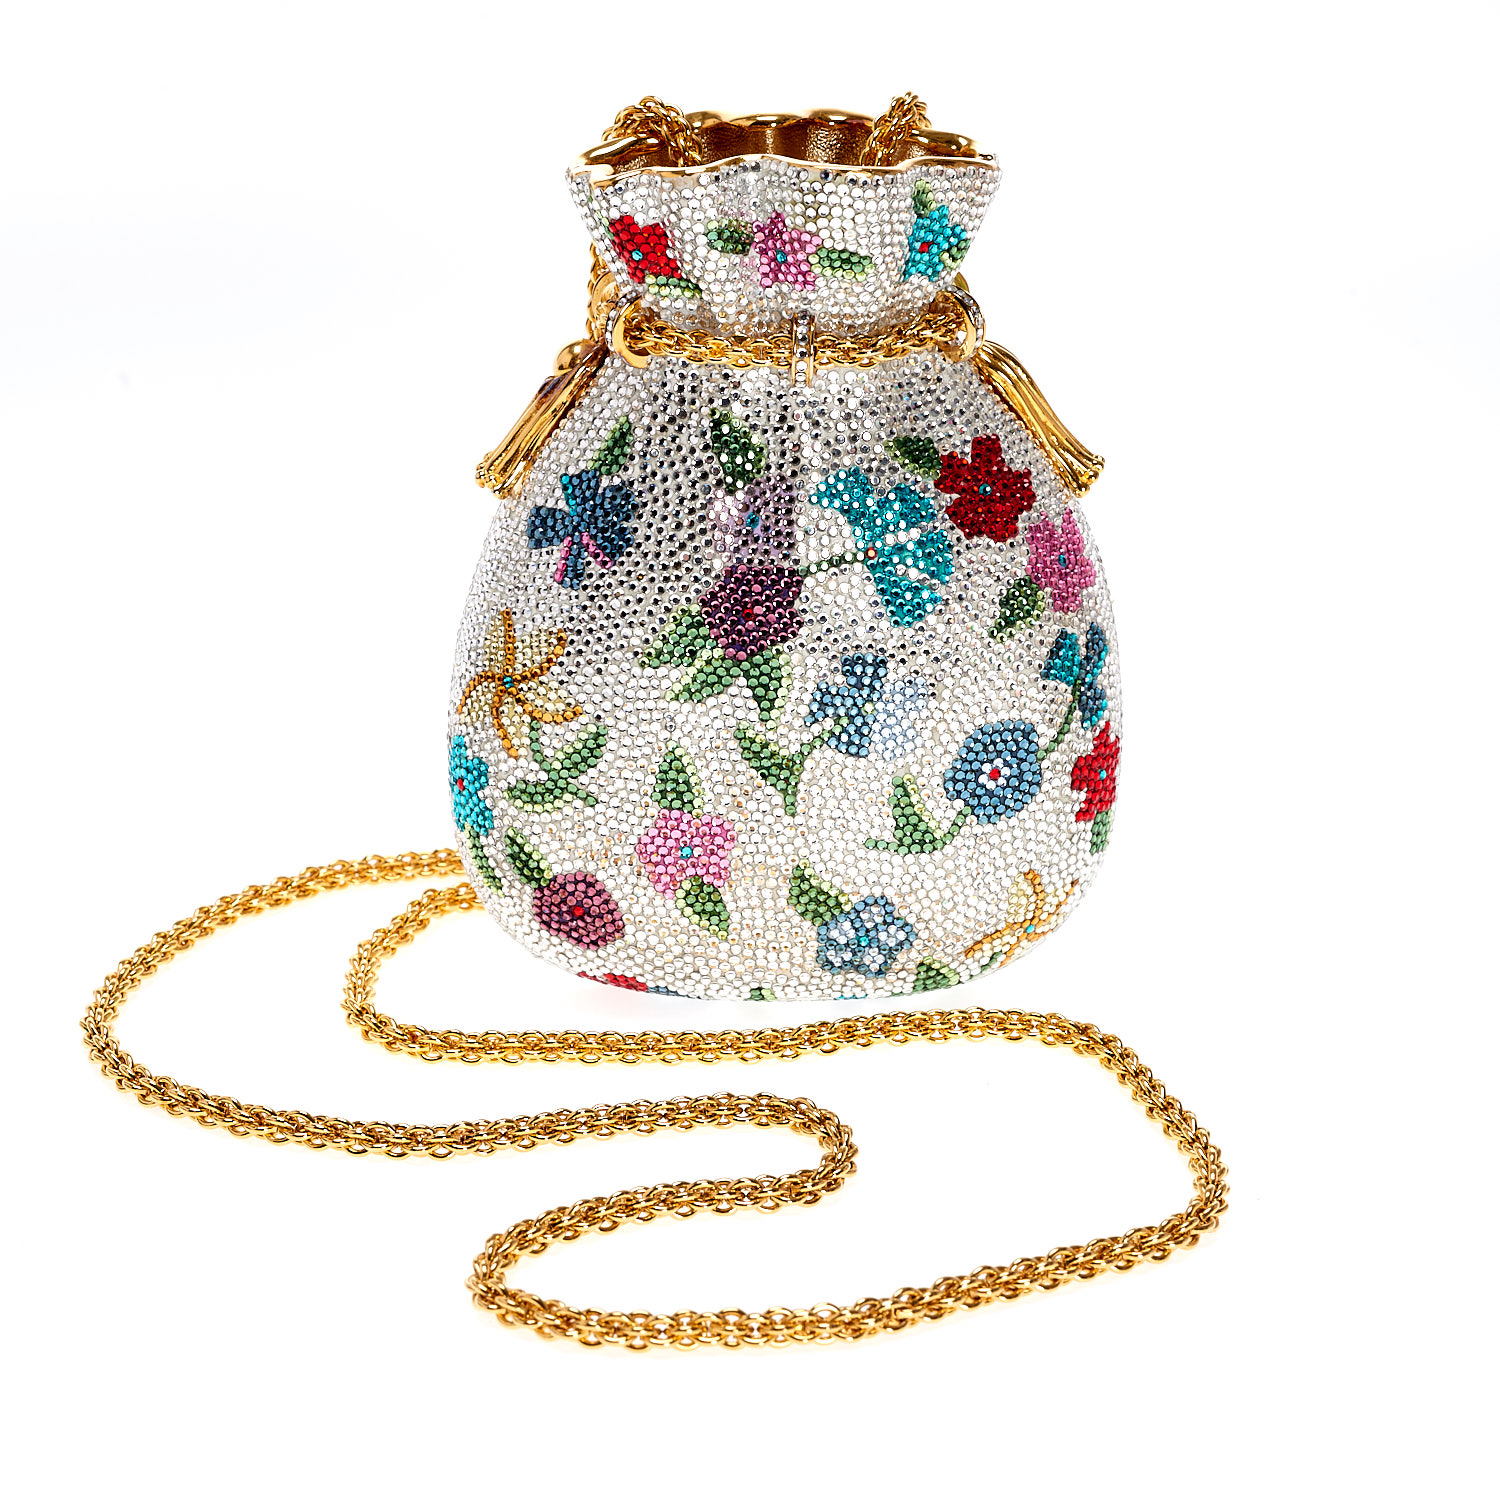 Sold at Auction: Judith Leiber Sterling Silver, Gem Stones Handbag